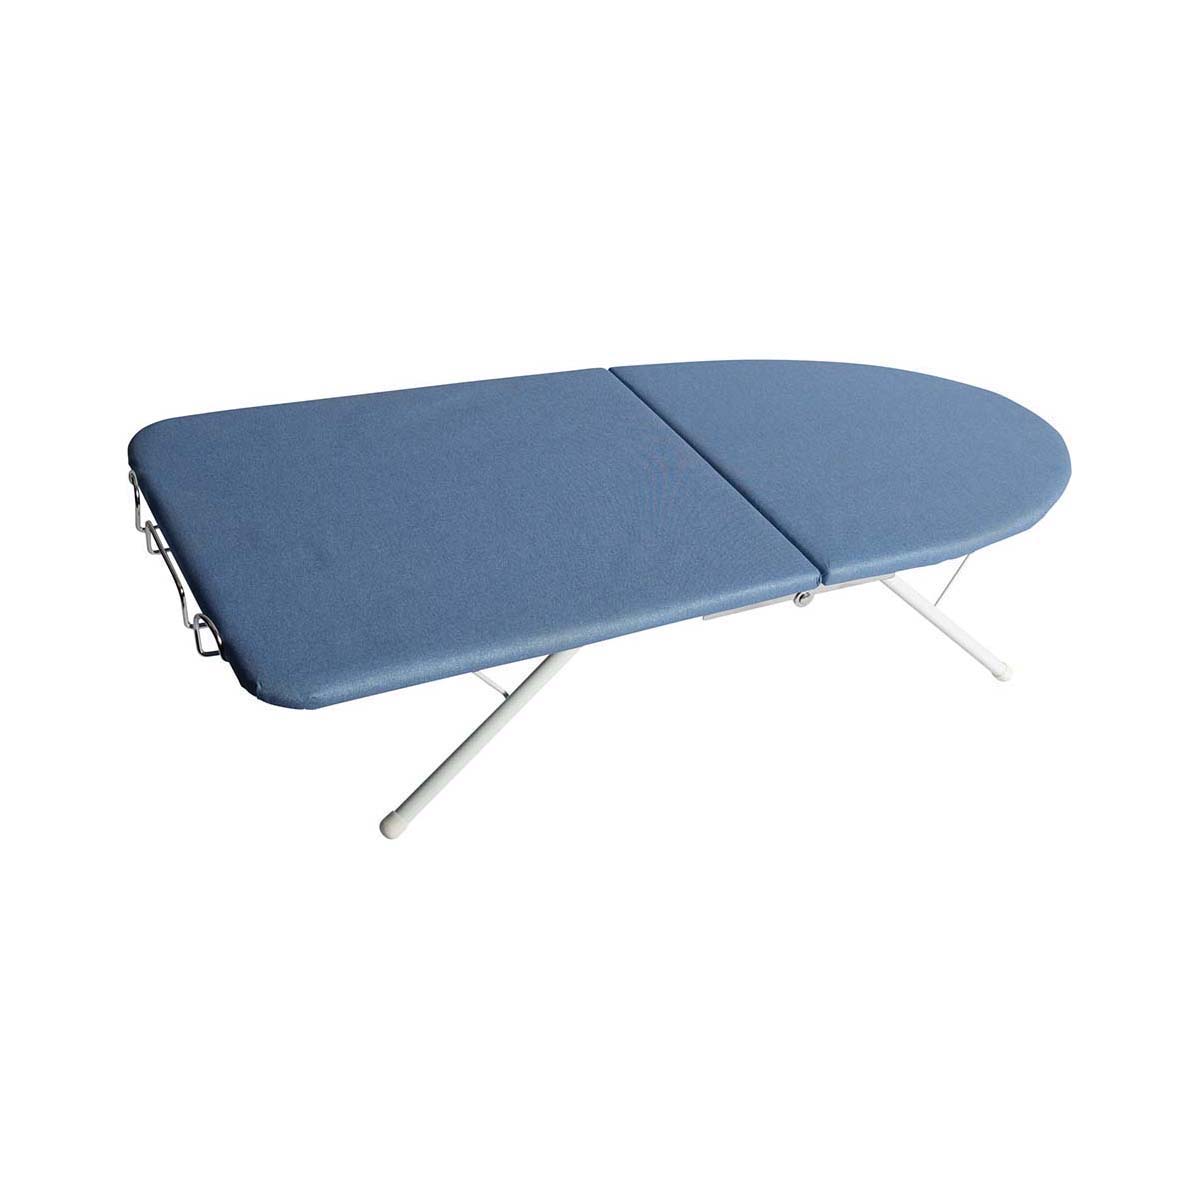 Companion Folding Ironing Board